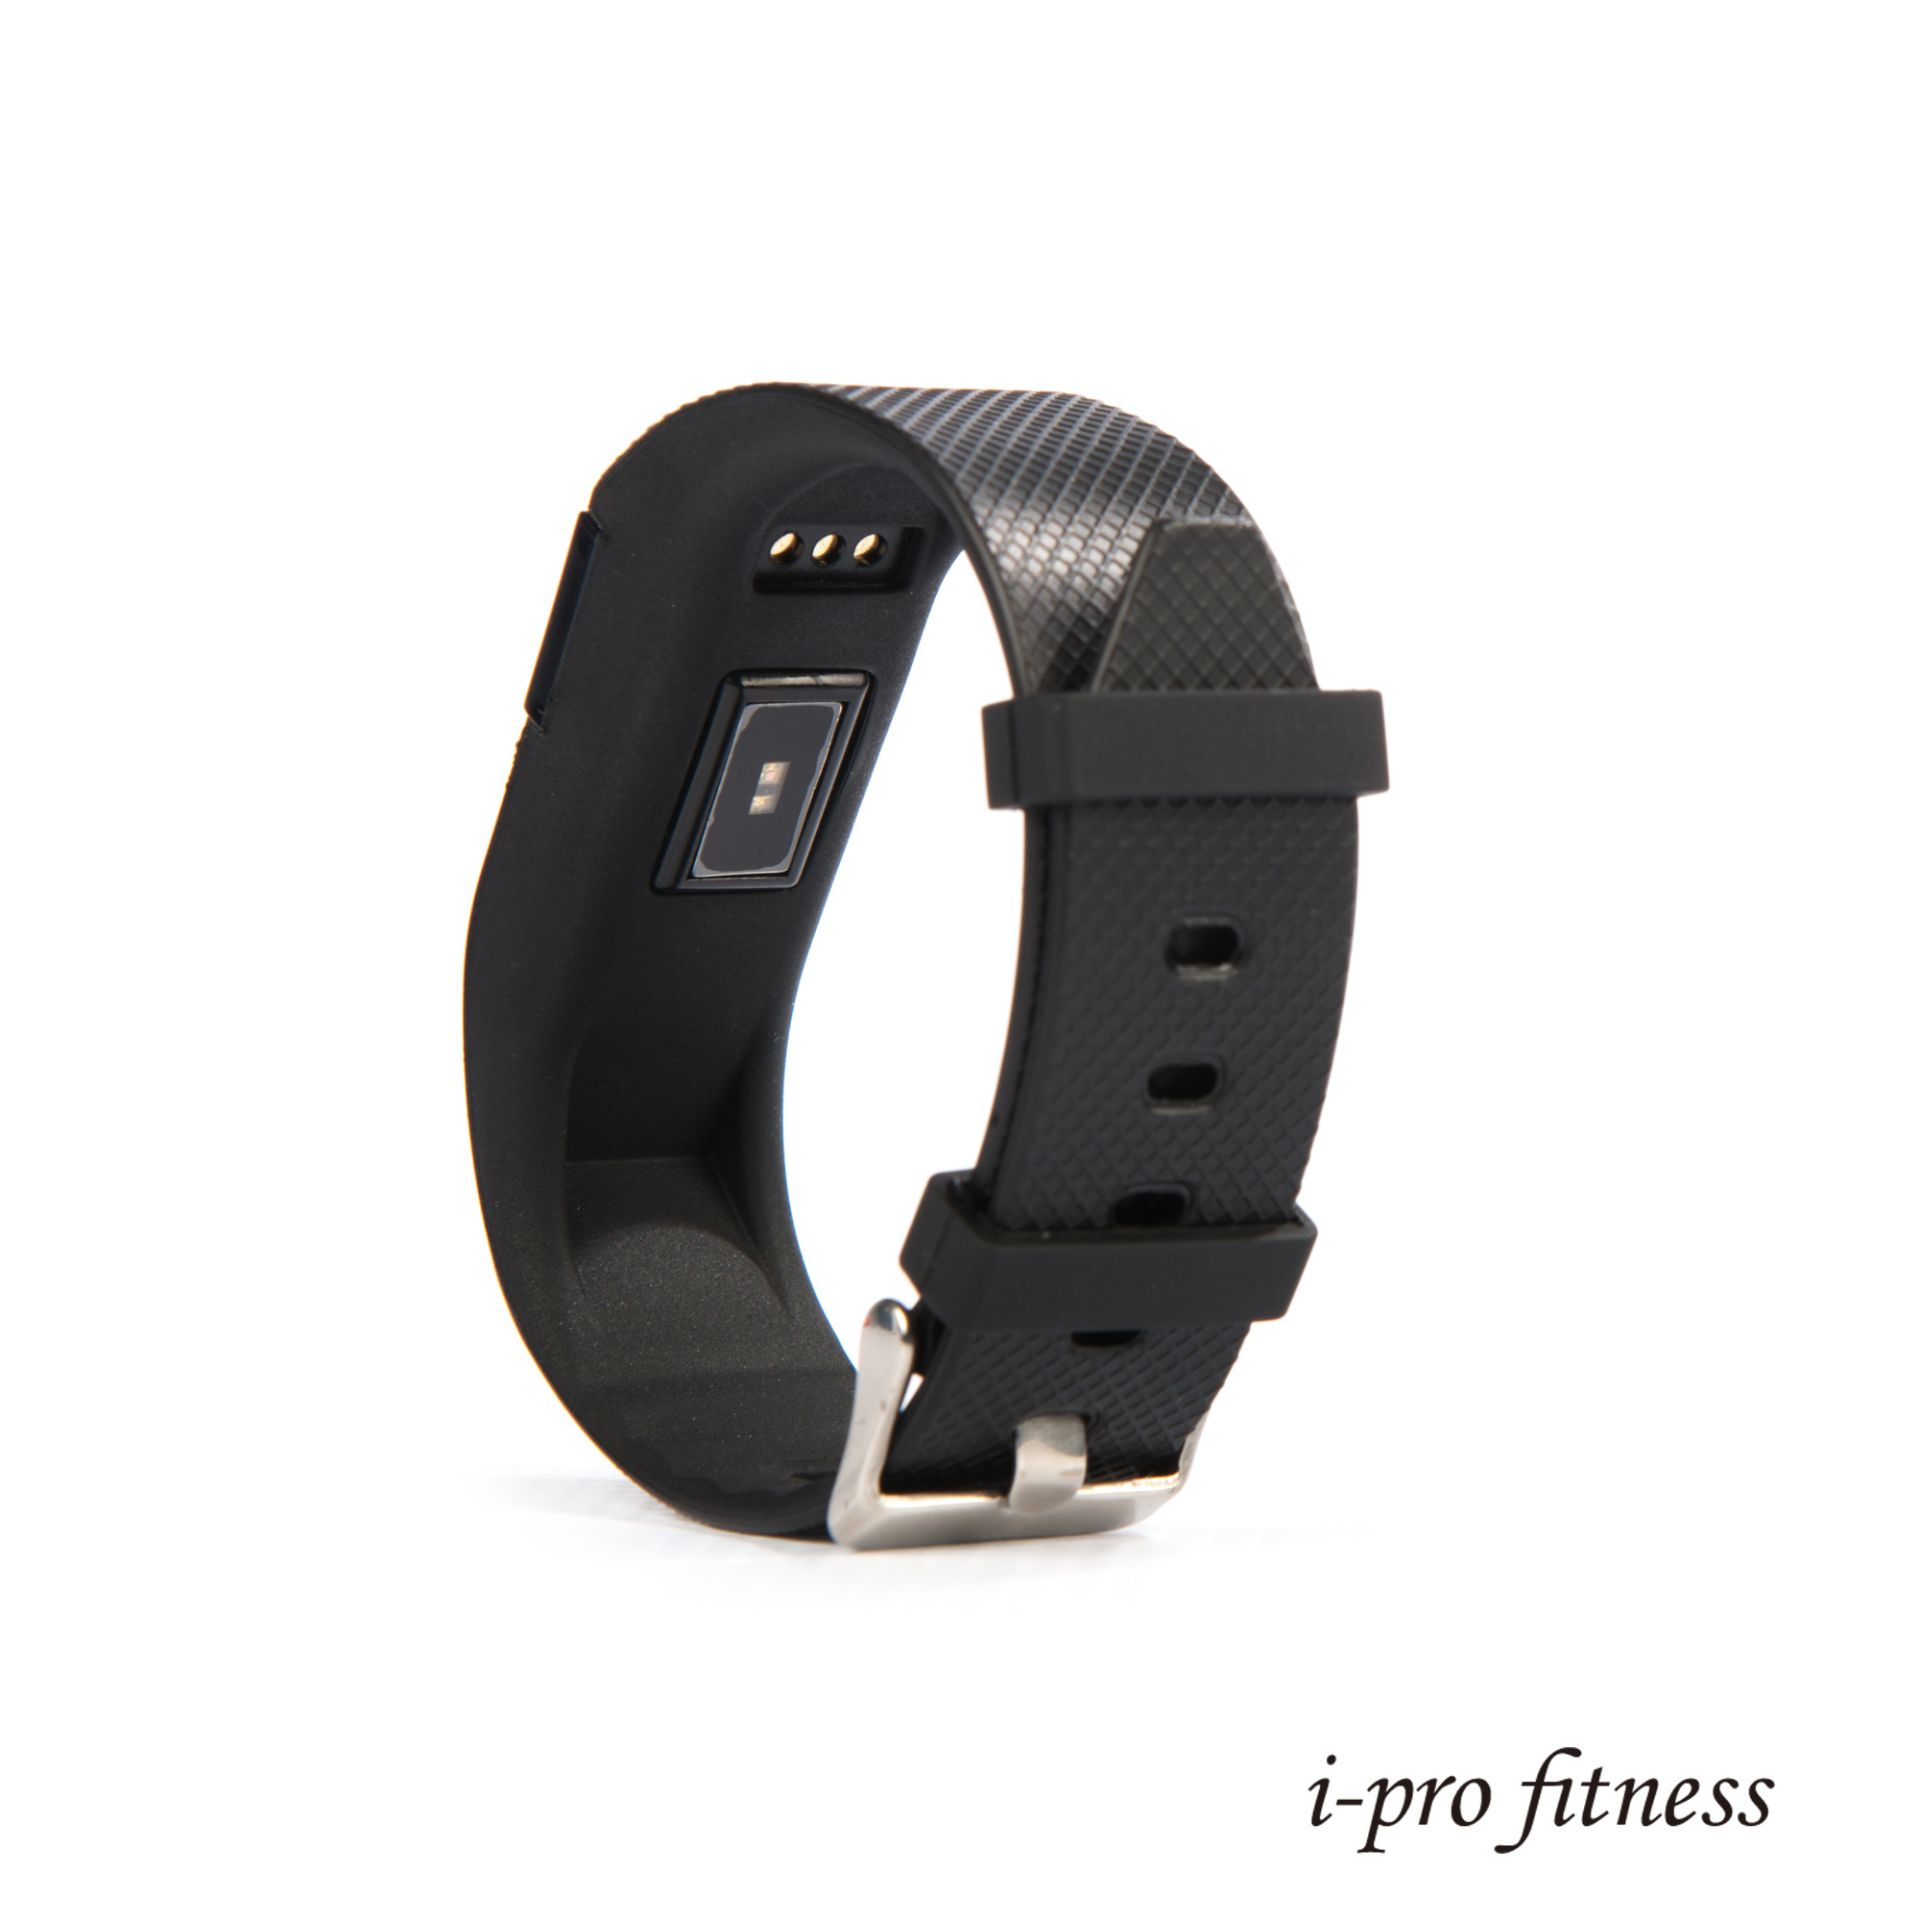 20x Fitness Tracker i-pro fitness, Bluetooth 4.0 Sports Smart Bracelet, Heart Rate Monitor, - Image 8 of 8